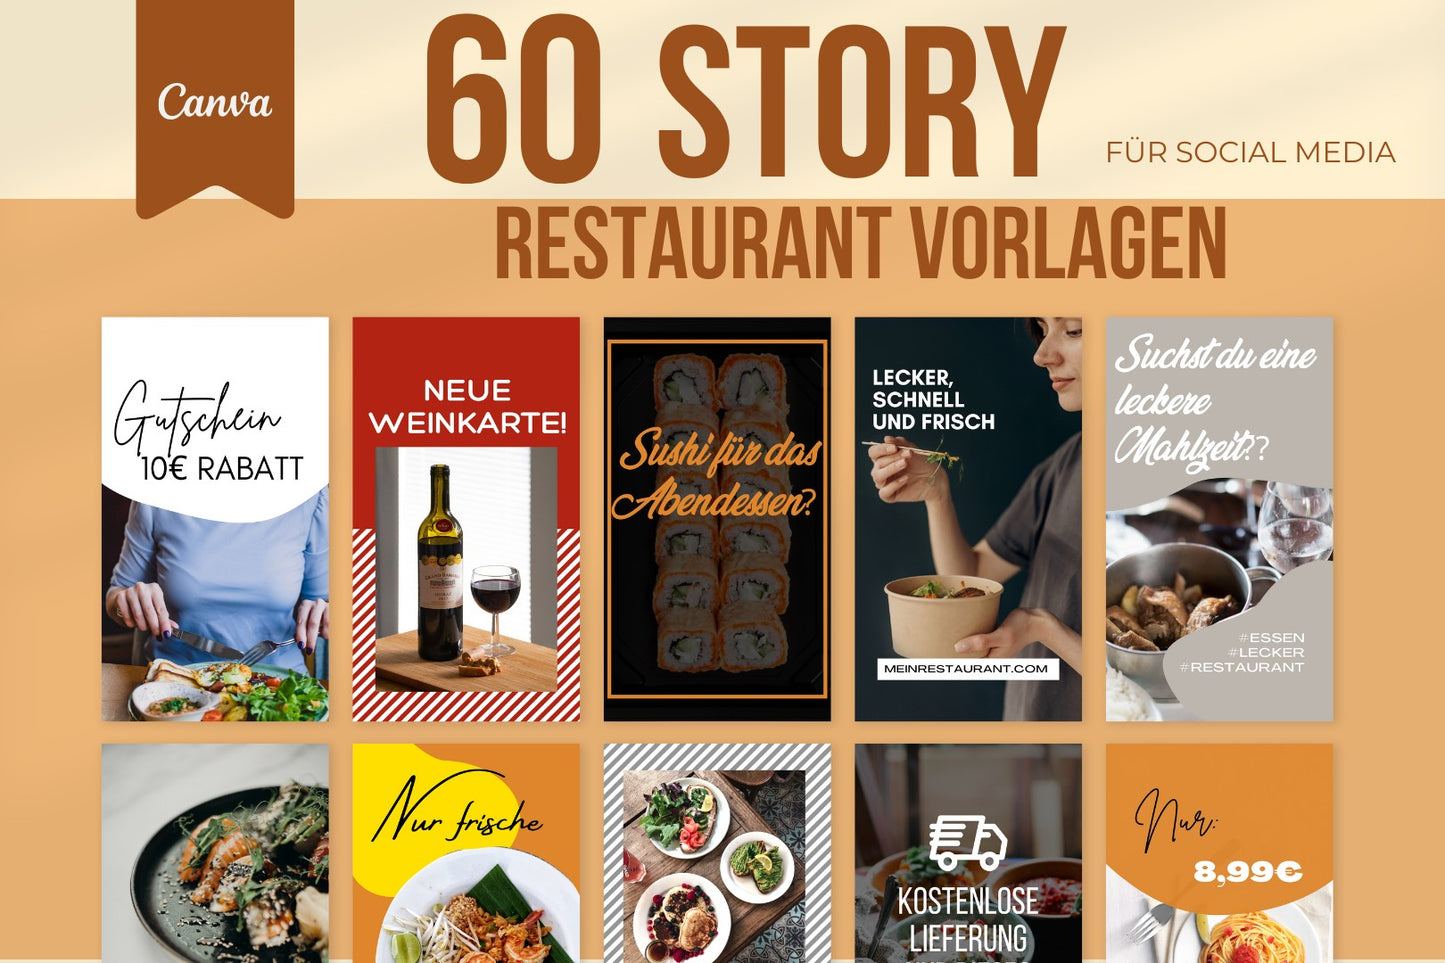 300 Restaurant Vorlagen für Social Media